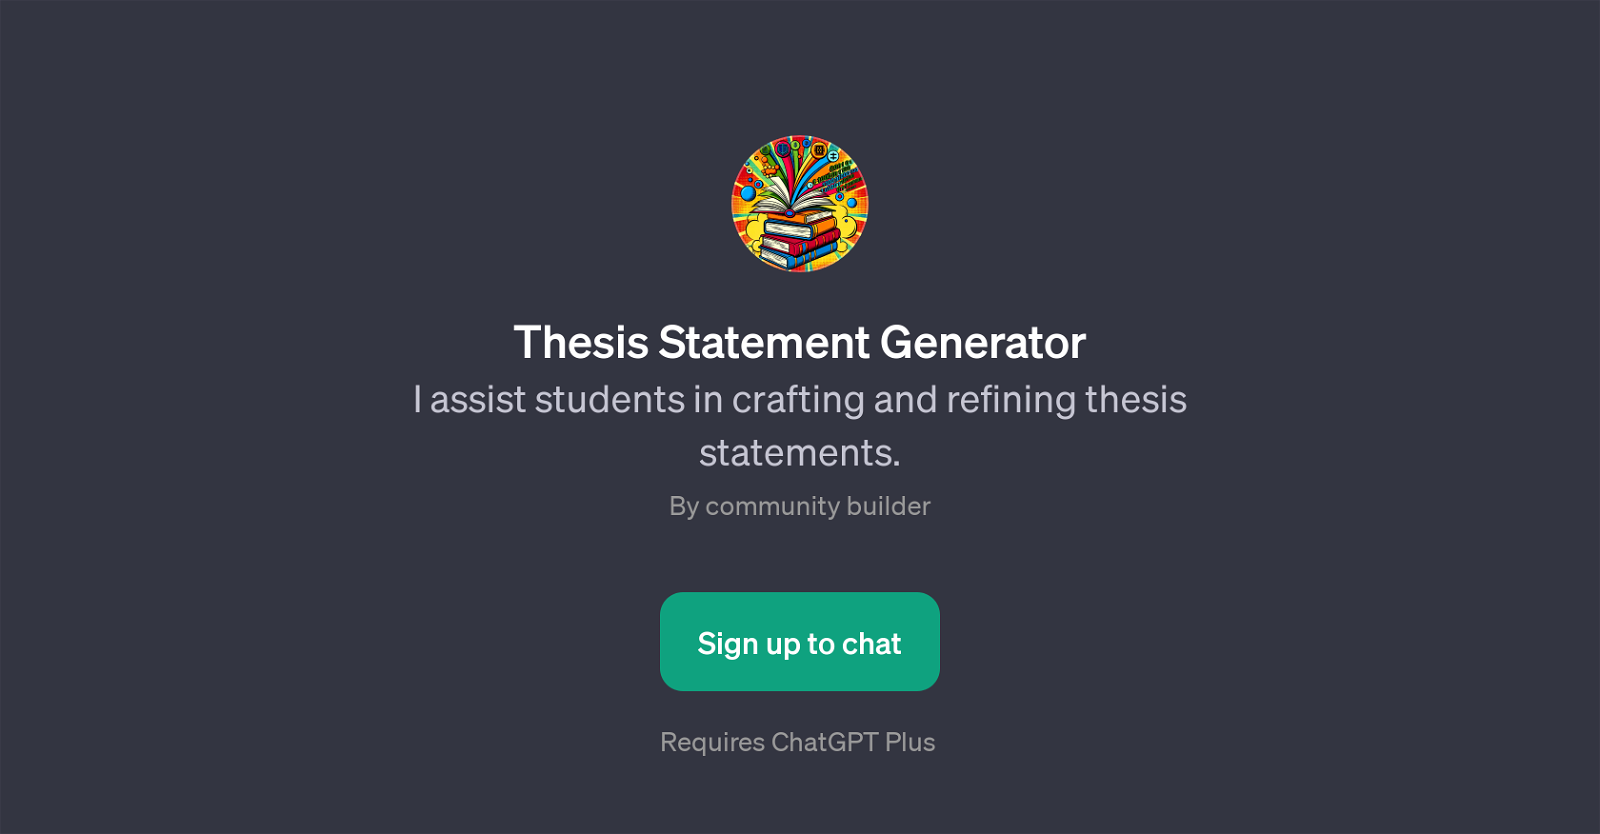 Thesis Statement Generator website